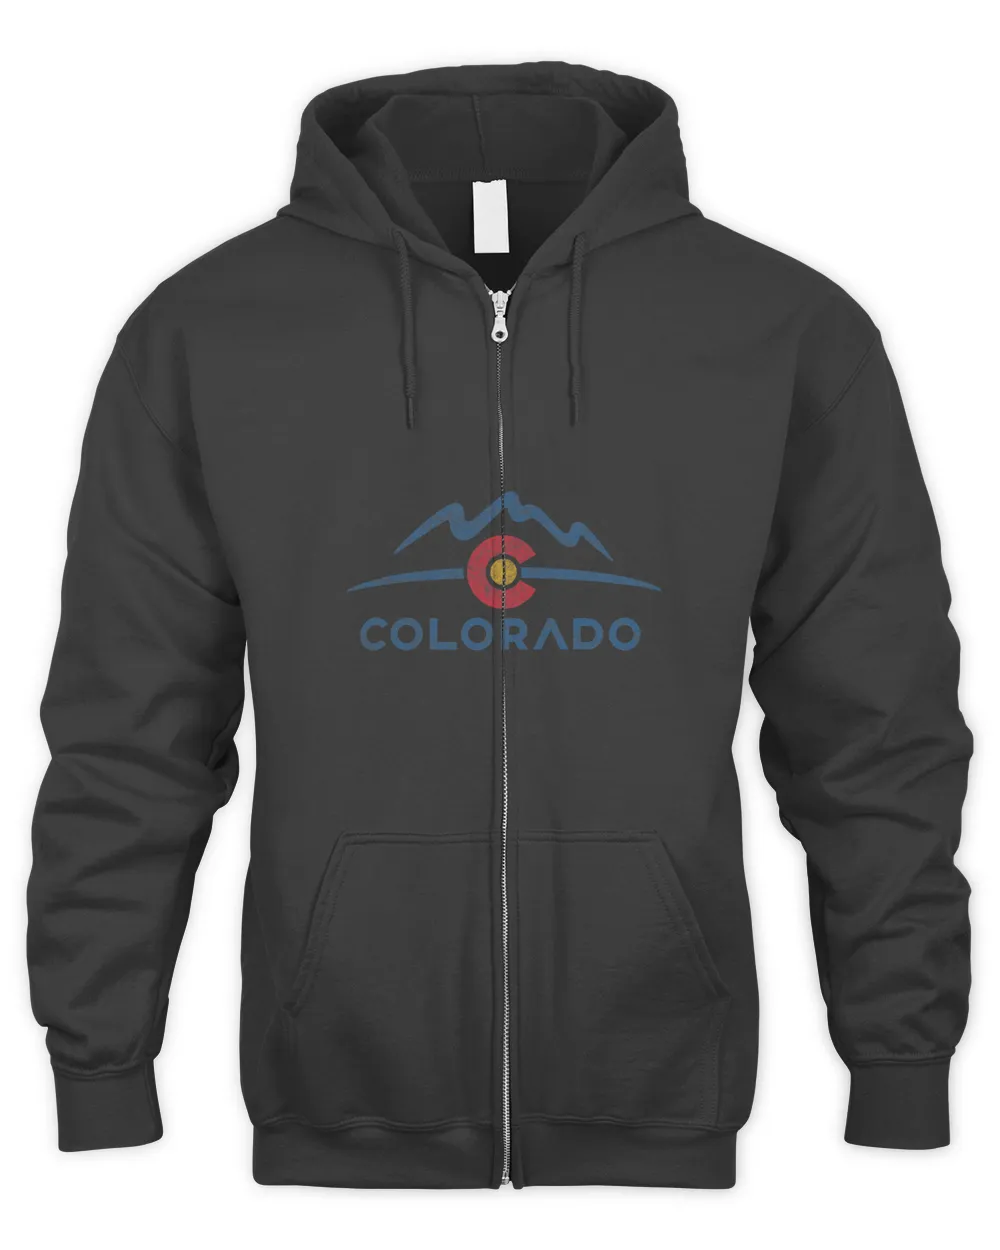 State Flag Colorado Rocky Mountains Skiing Aspen Vail